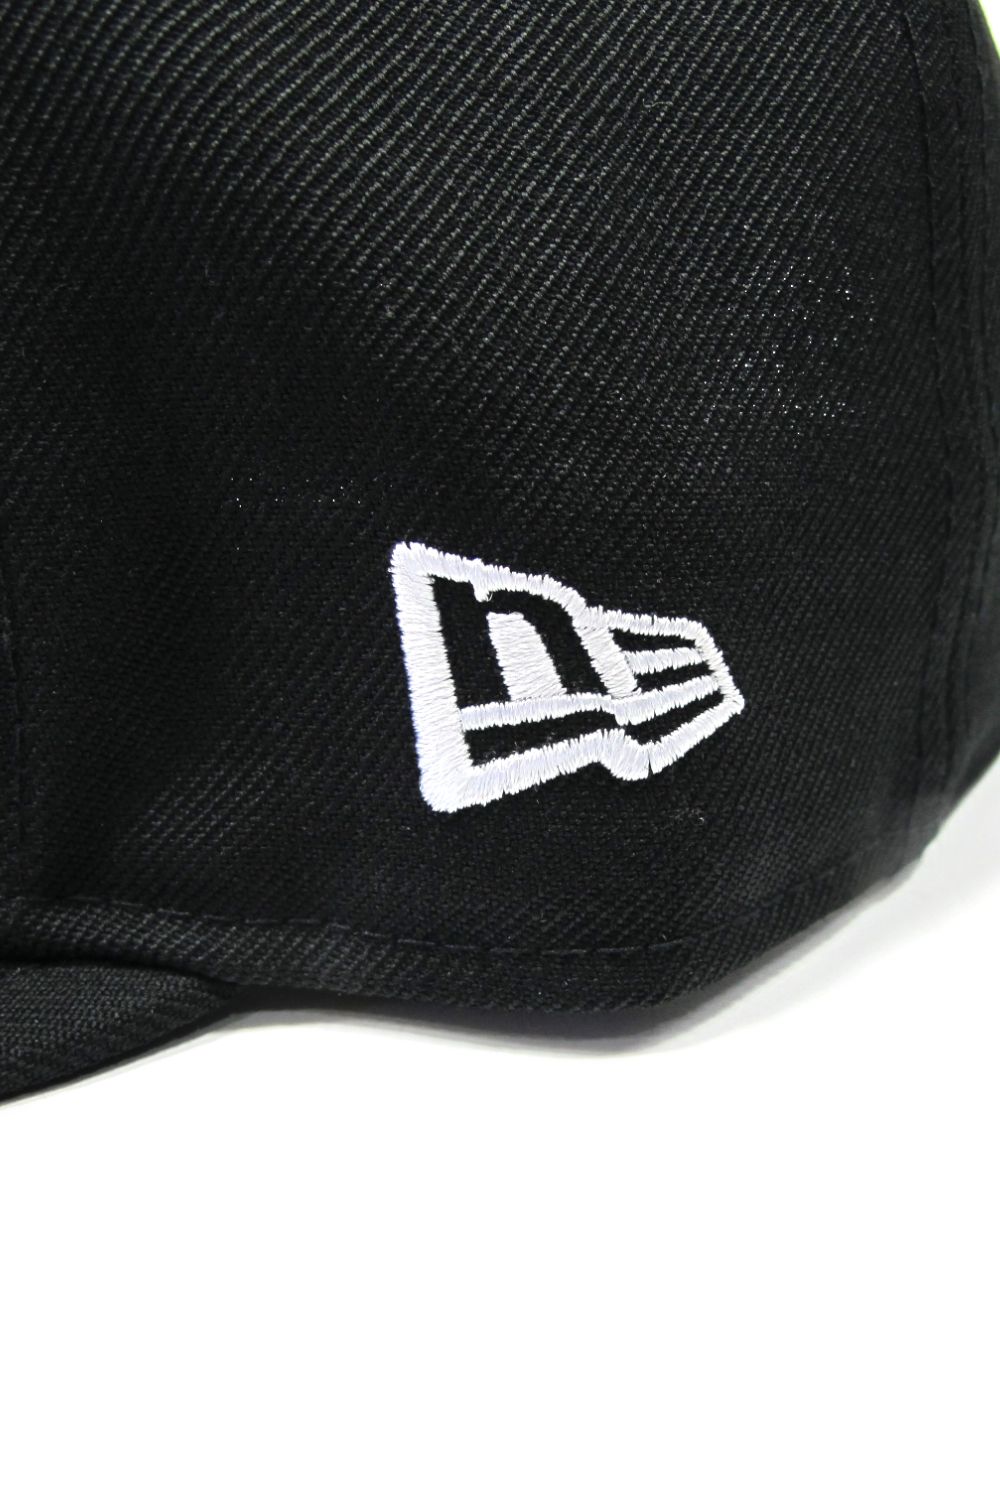 HIDE AND SEEK - ×TENDERLOIN×NEWERA BASEBALL CAP (BLACK 